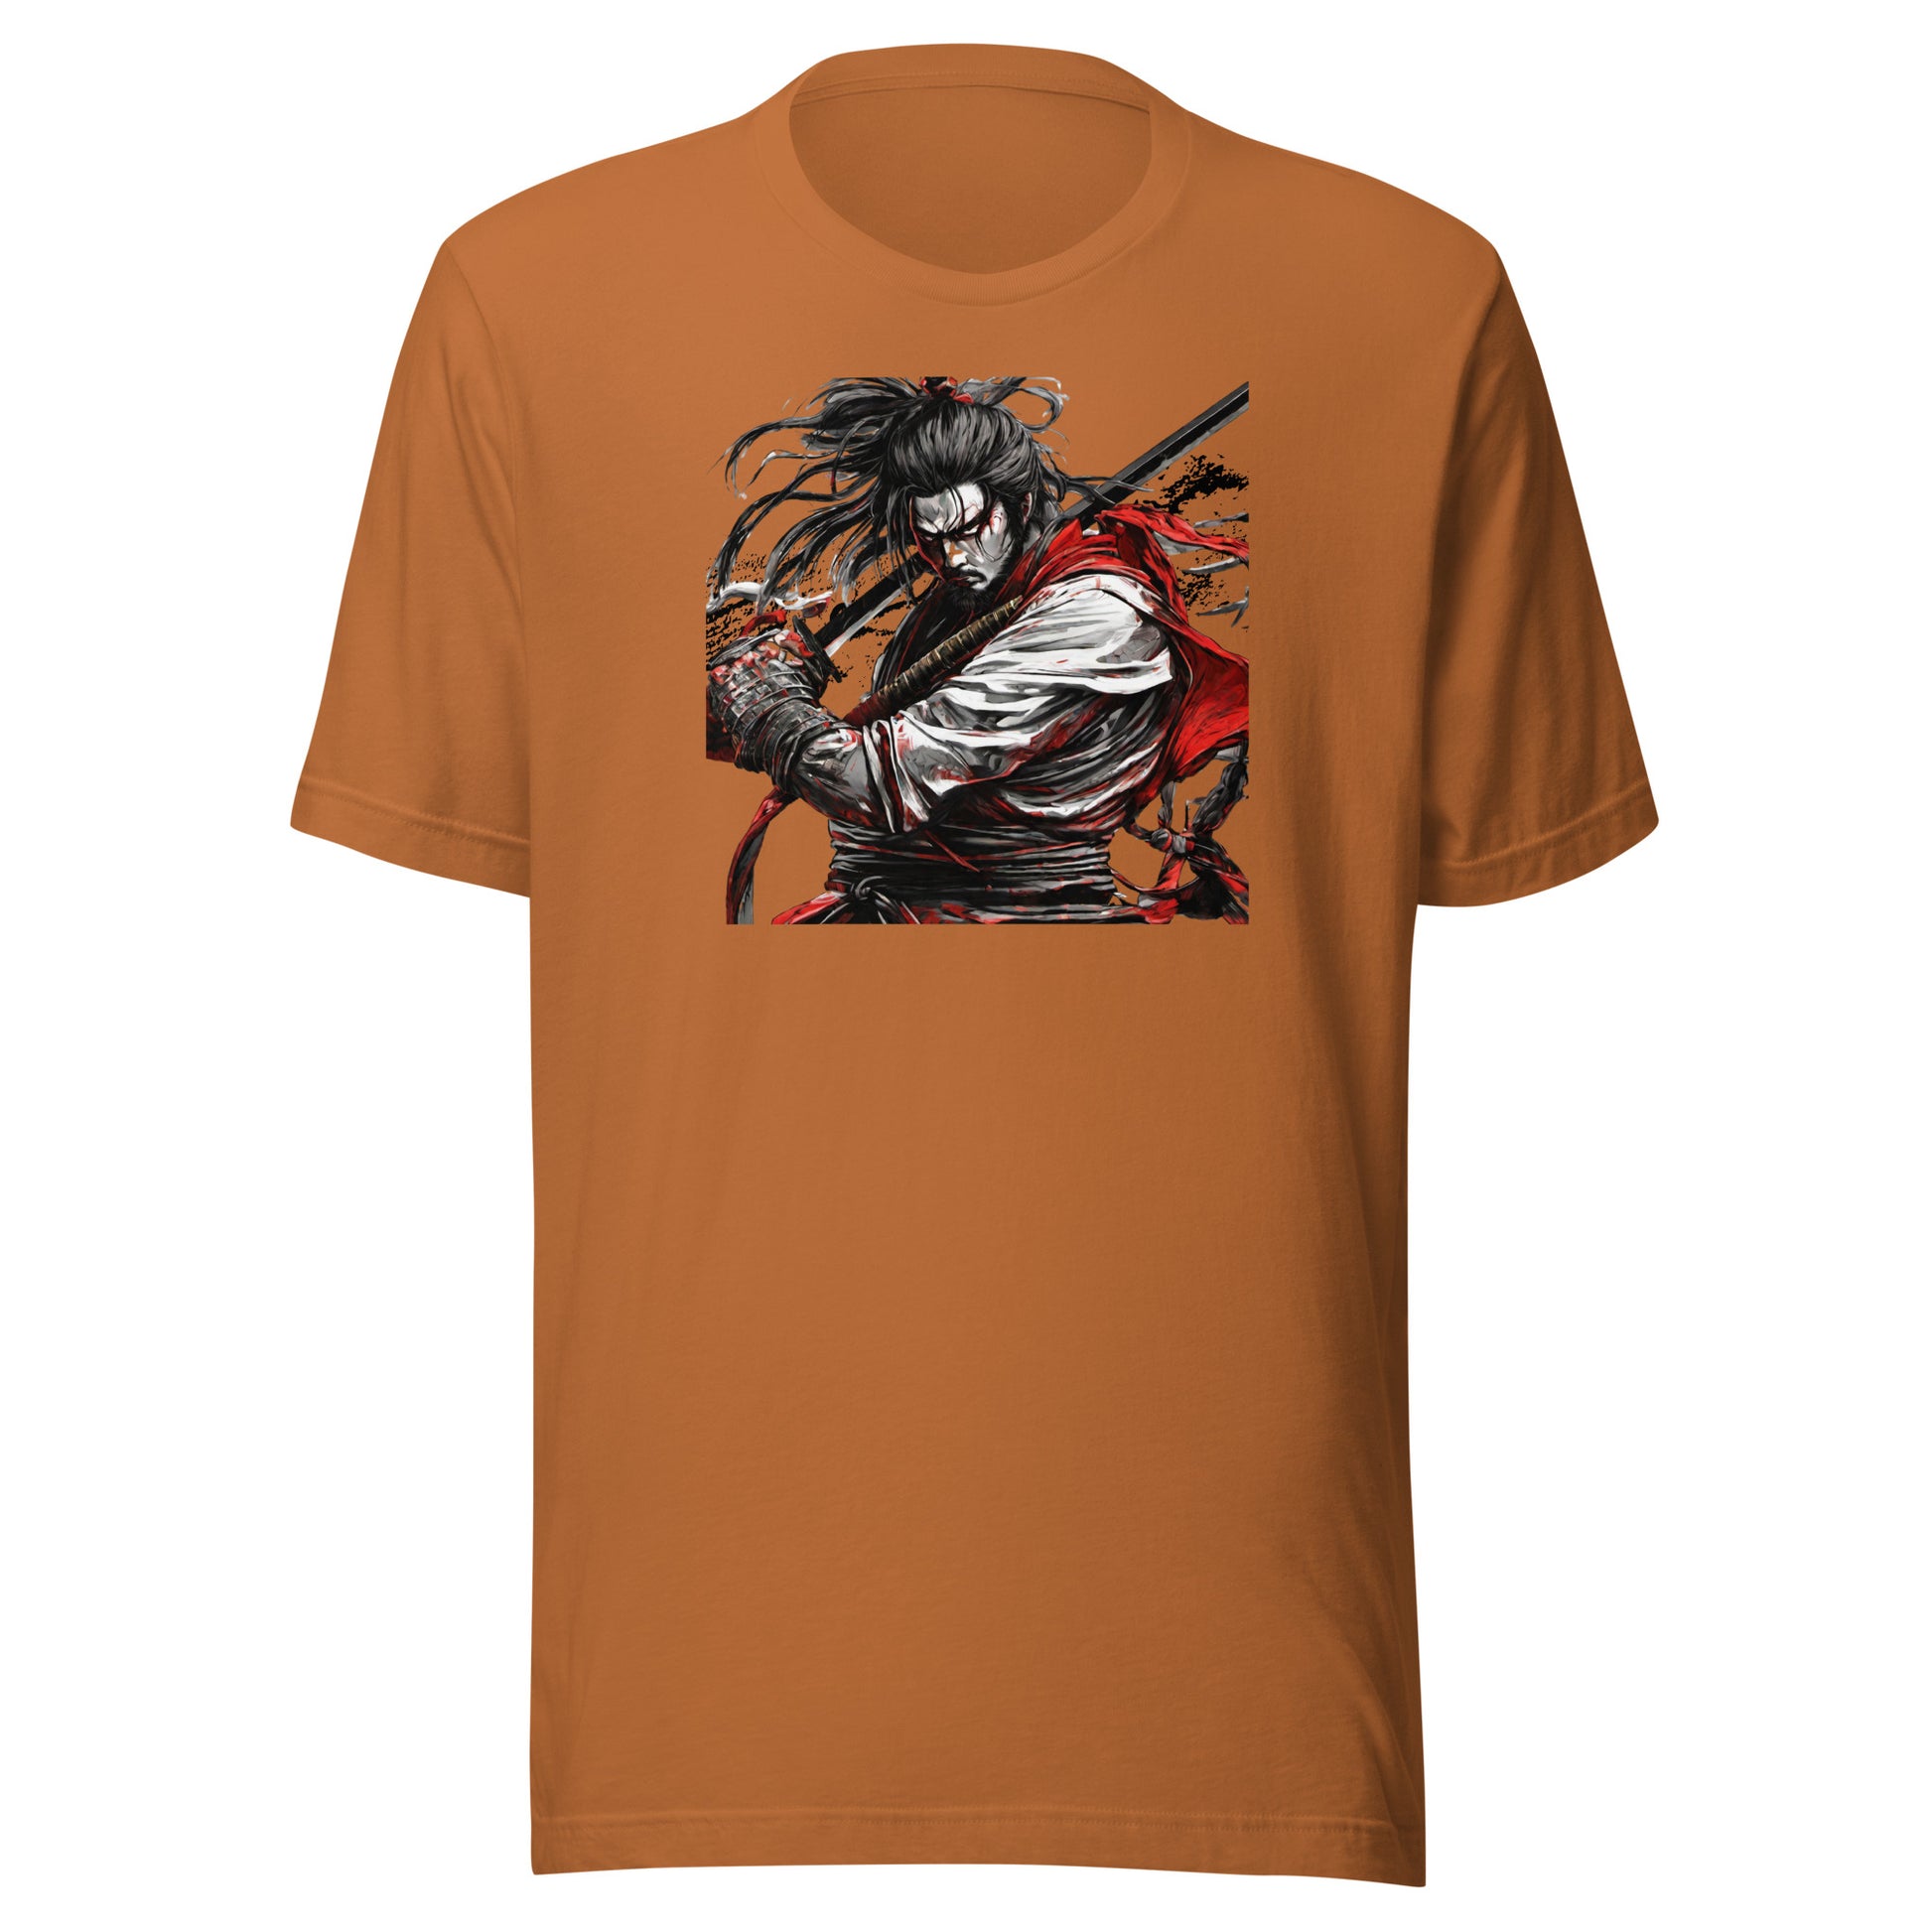 Graceful Warrior Men's Graphic T-Shirt Toast